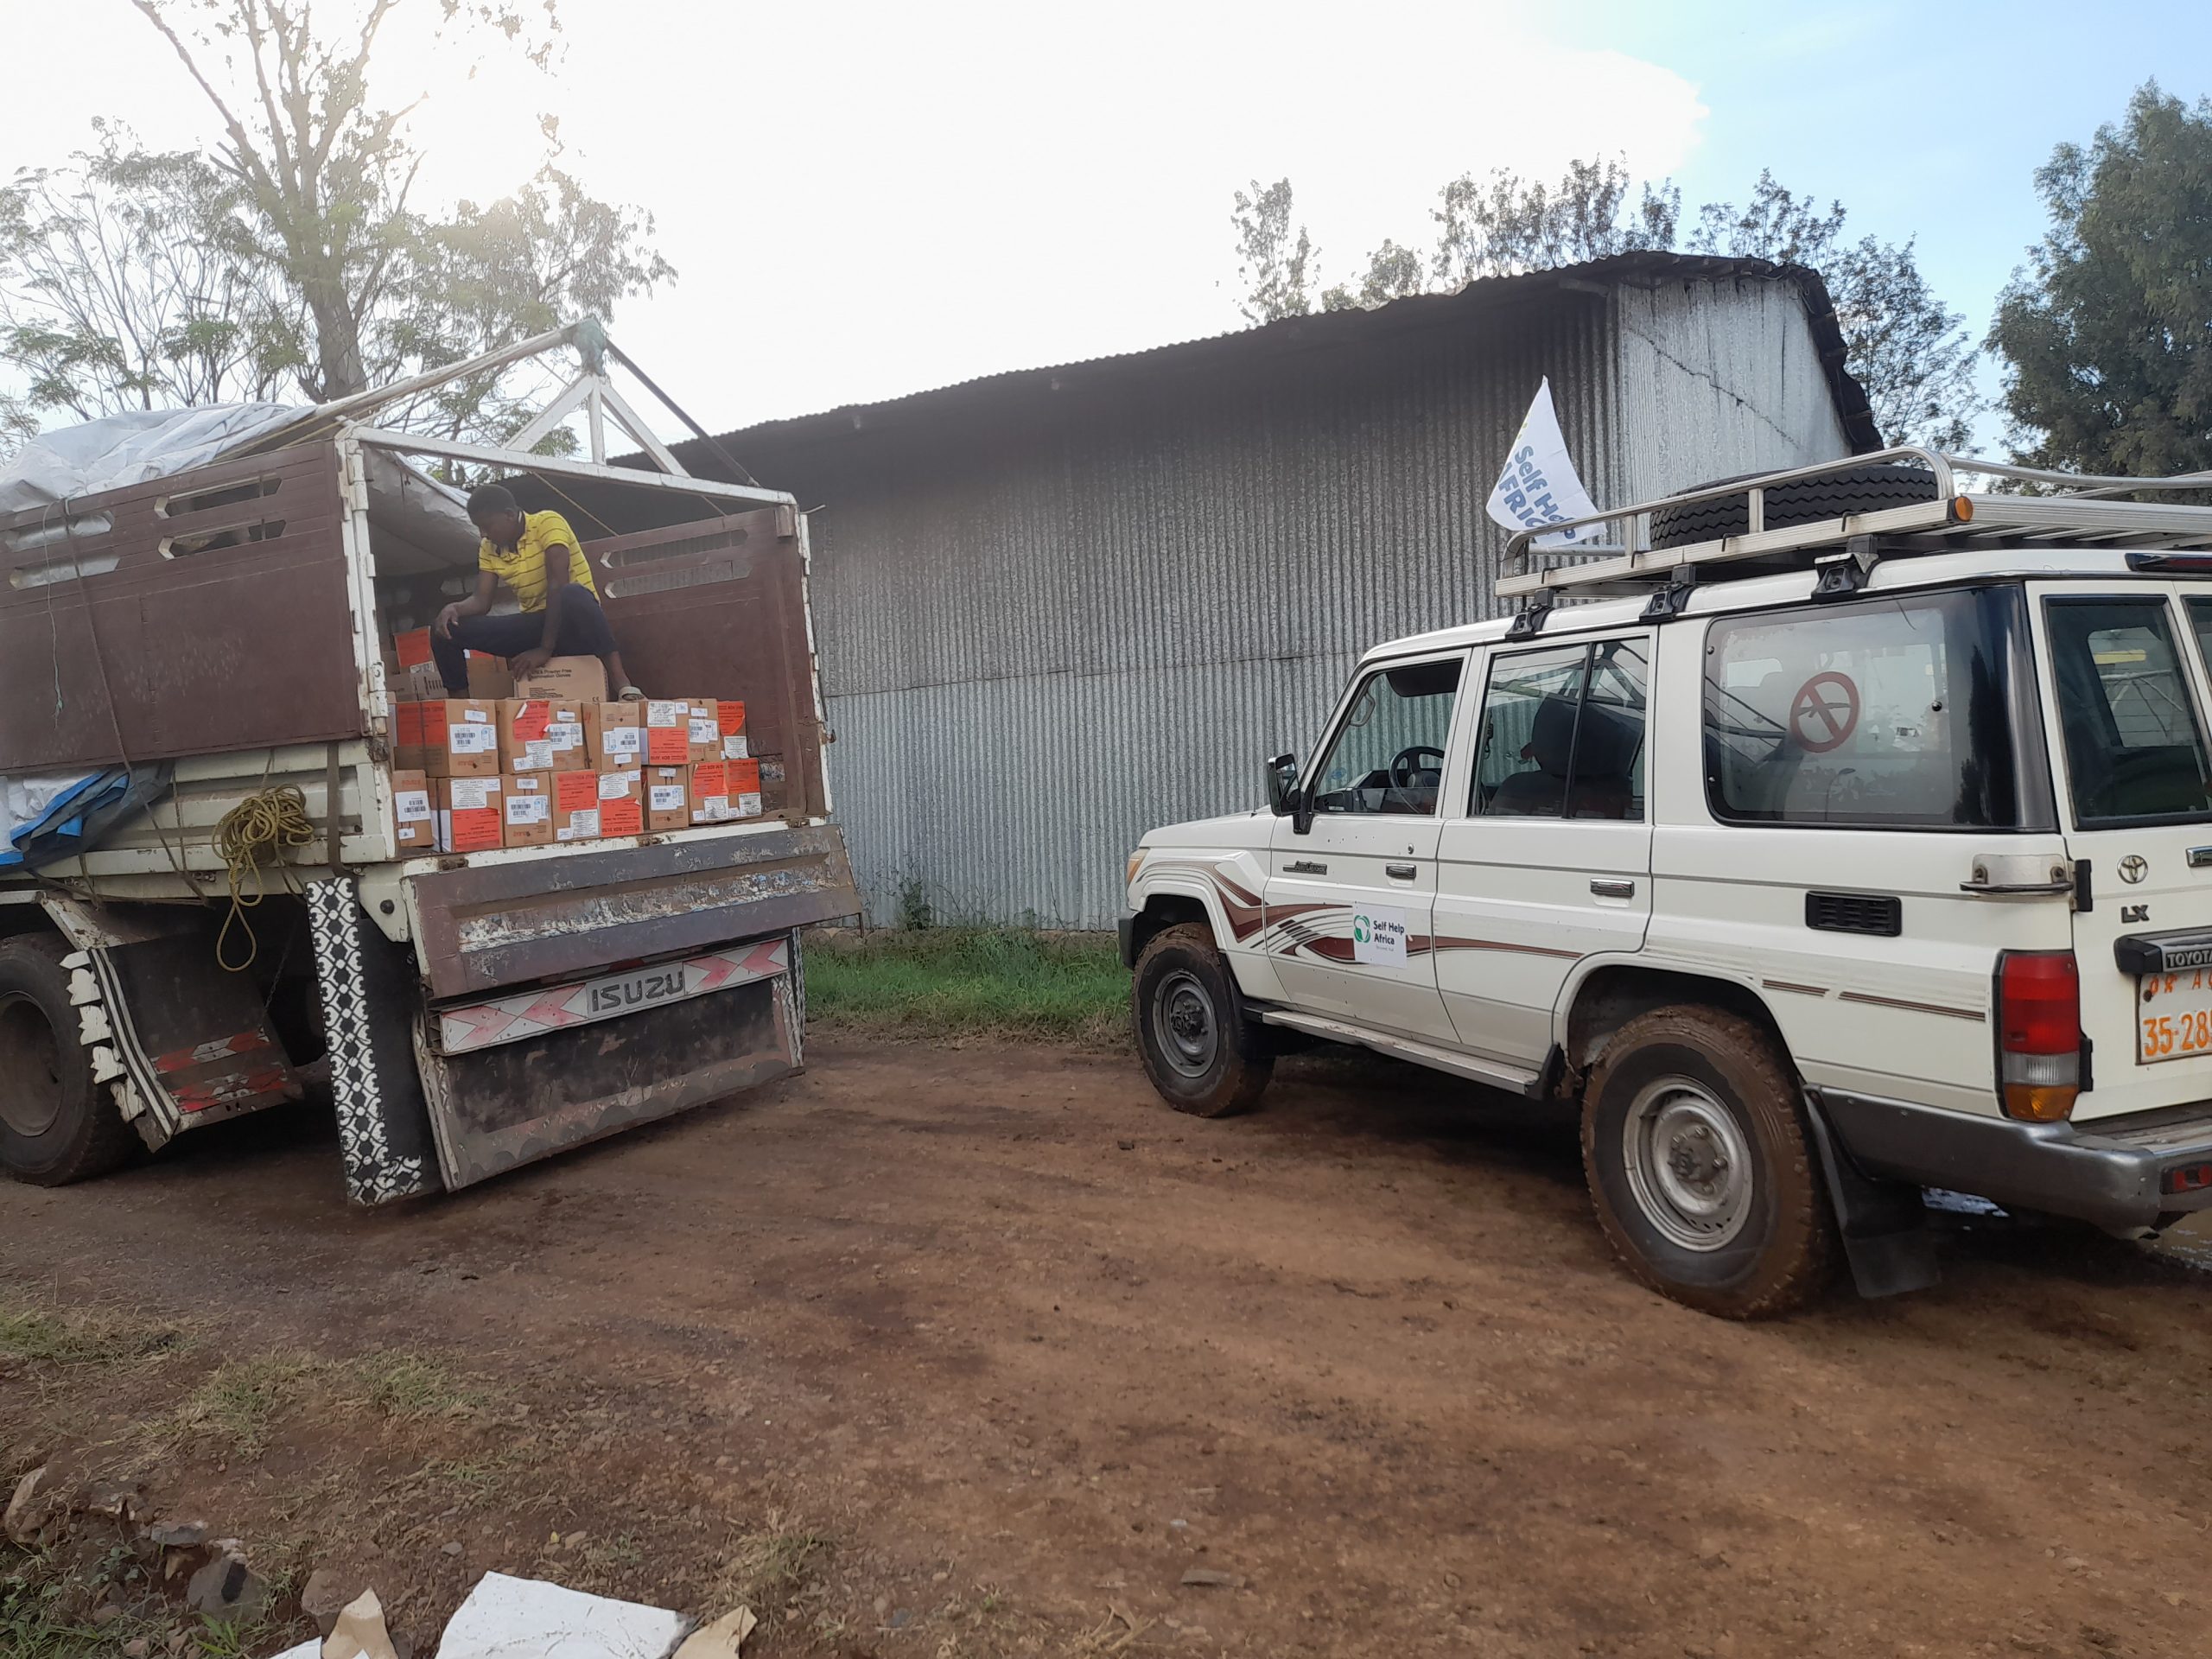 Self Help Africa staff delivering aid in Ethiopia's Amhara region